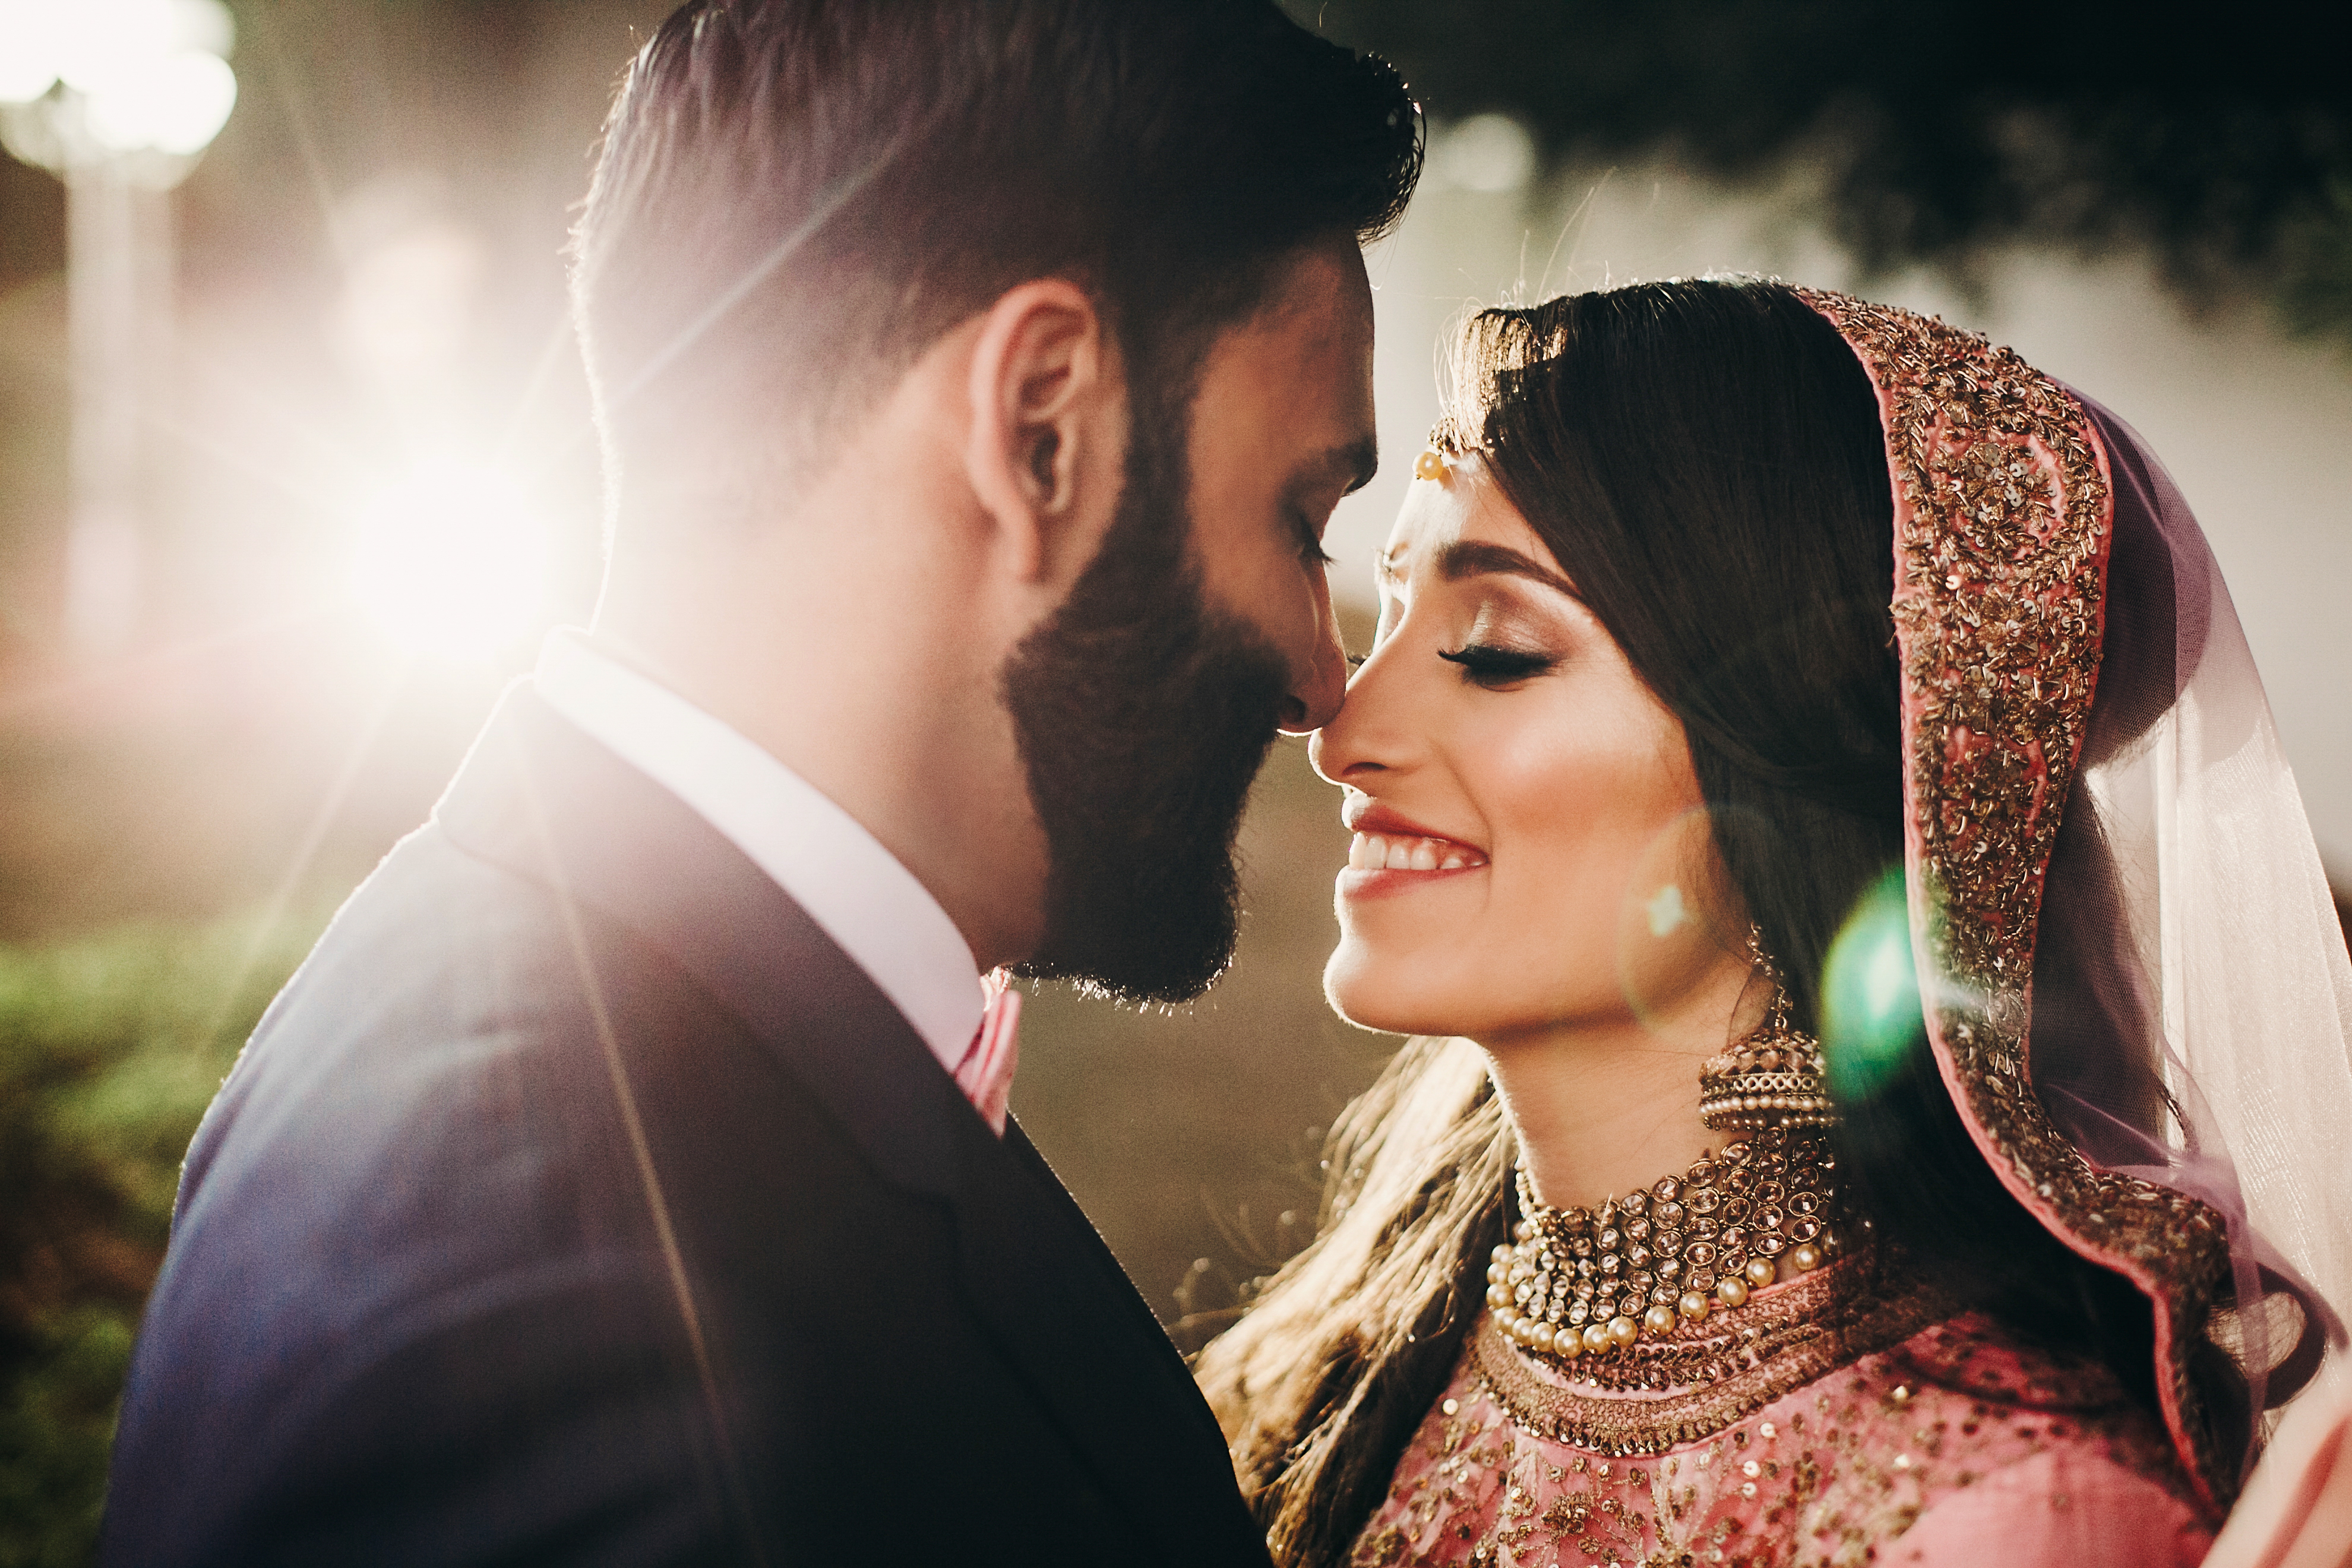 Un matrimonio feliz. | Foto: Shutterstock